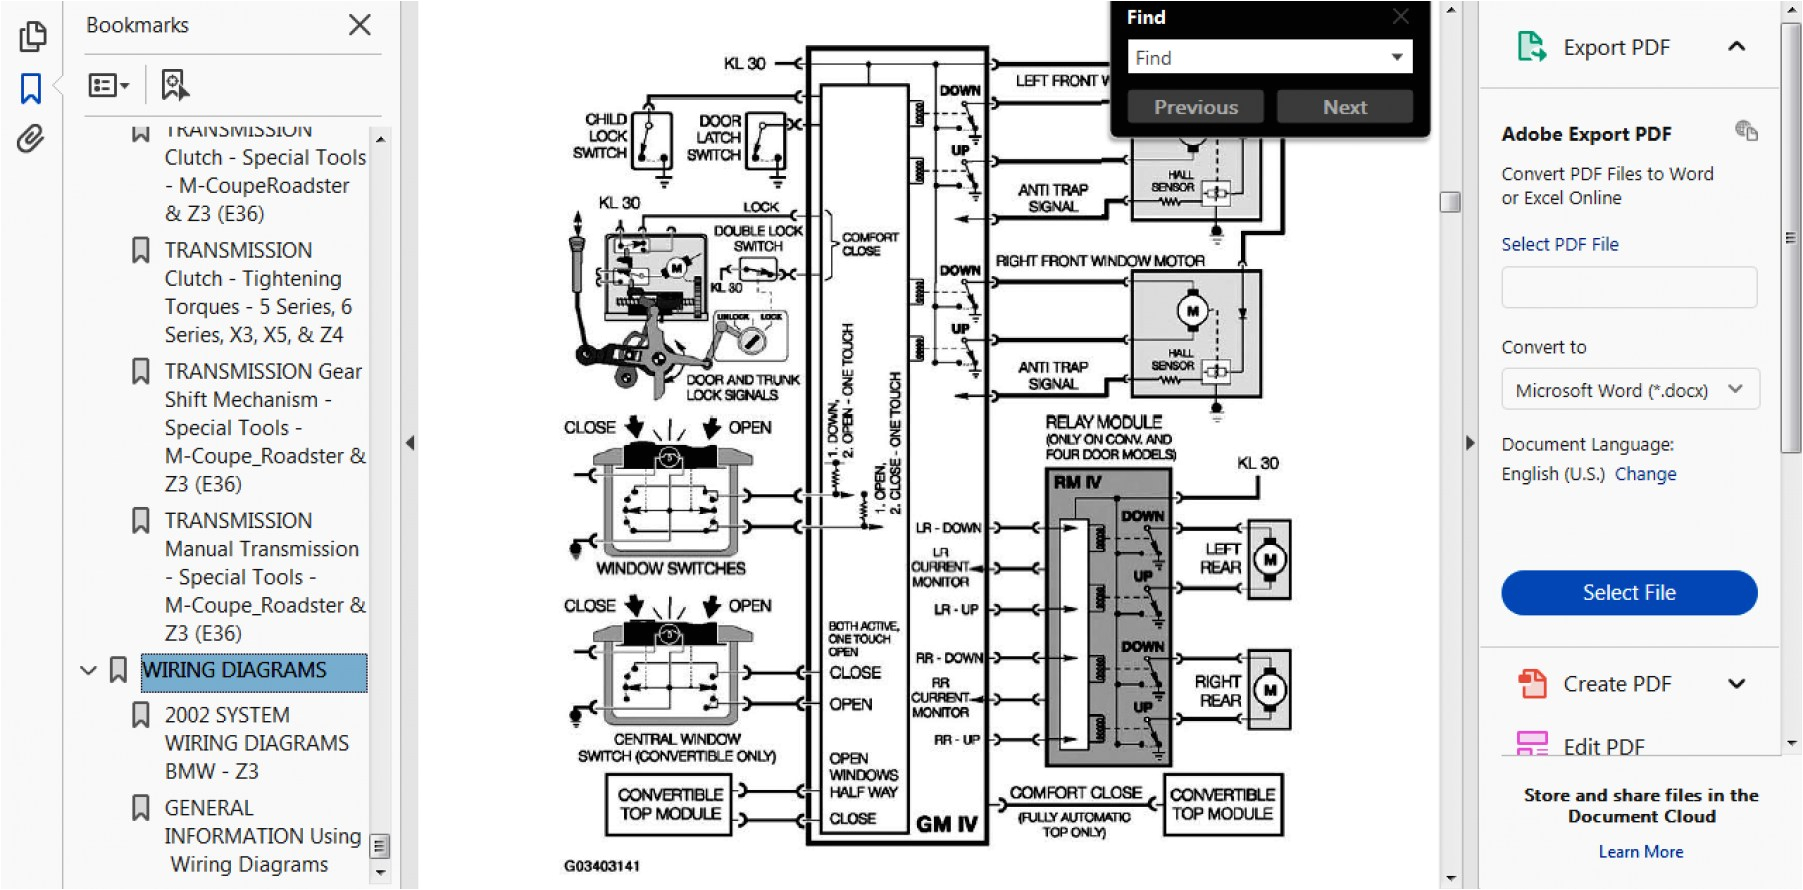 z3 fuse diagram wiring diagrambmw z3 fuse diagram wiring diagram article review mix bmw z3 fuse